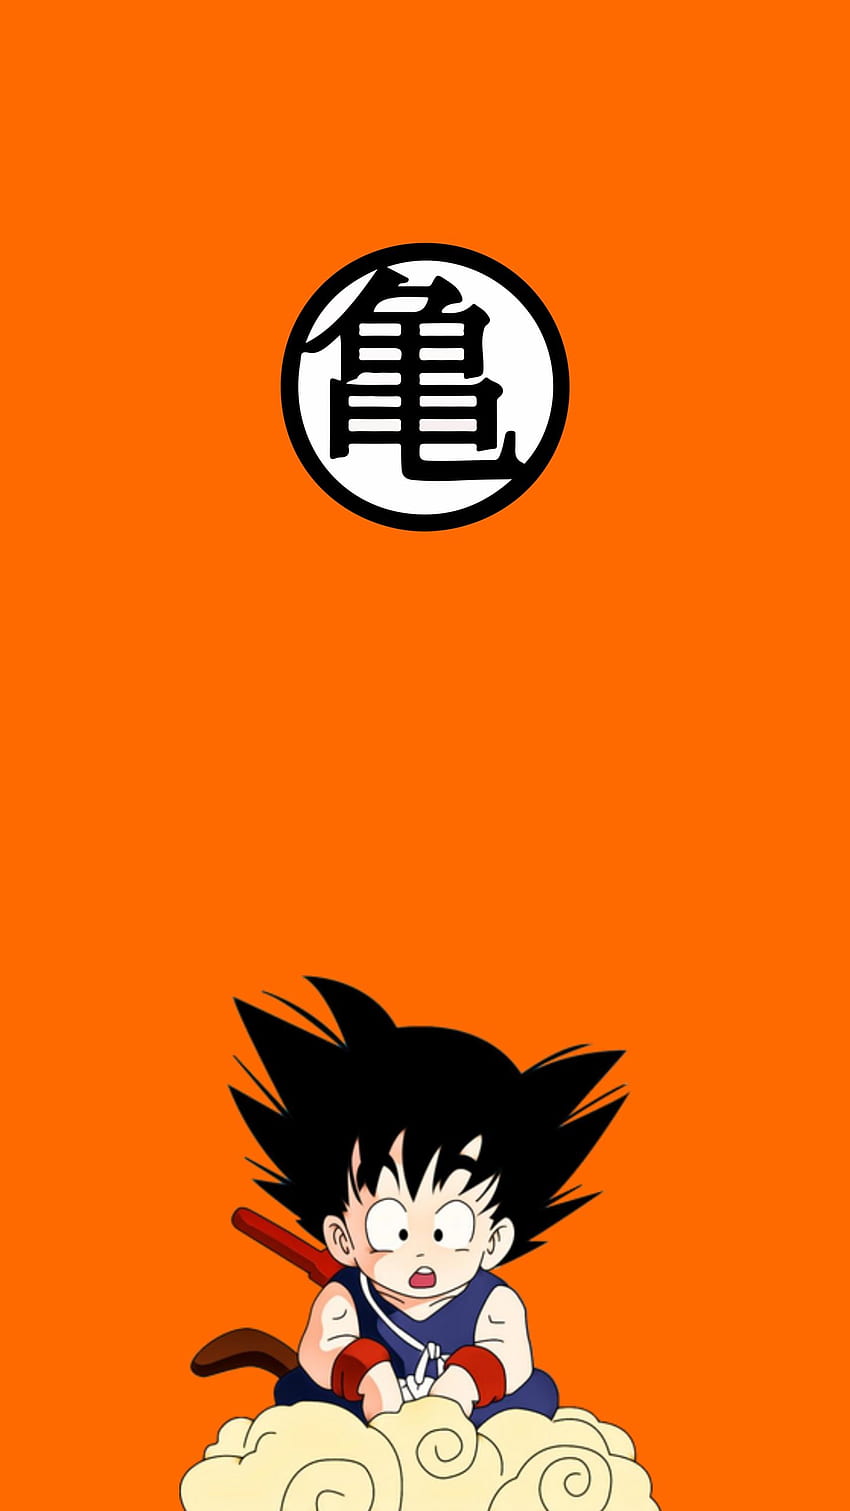 1440×2560] -1440p Ponsel Goku Anak Sederhana yang Saya Buat [] – Dump, Young Goku wallpaper ponsel HD